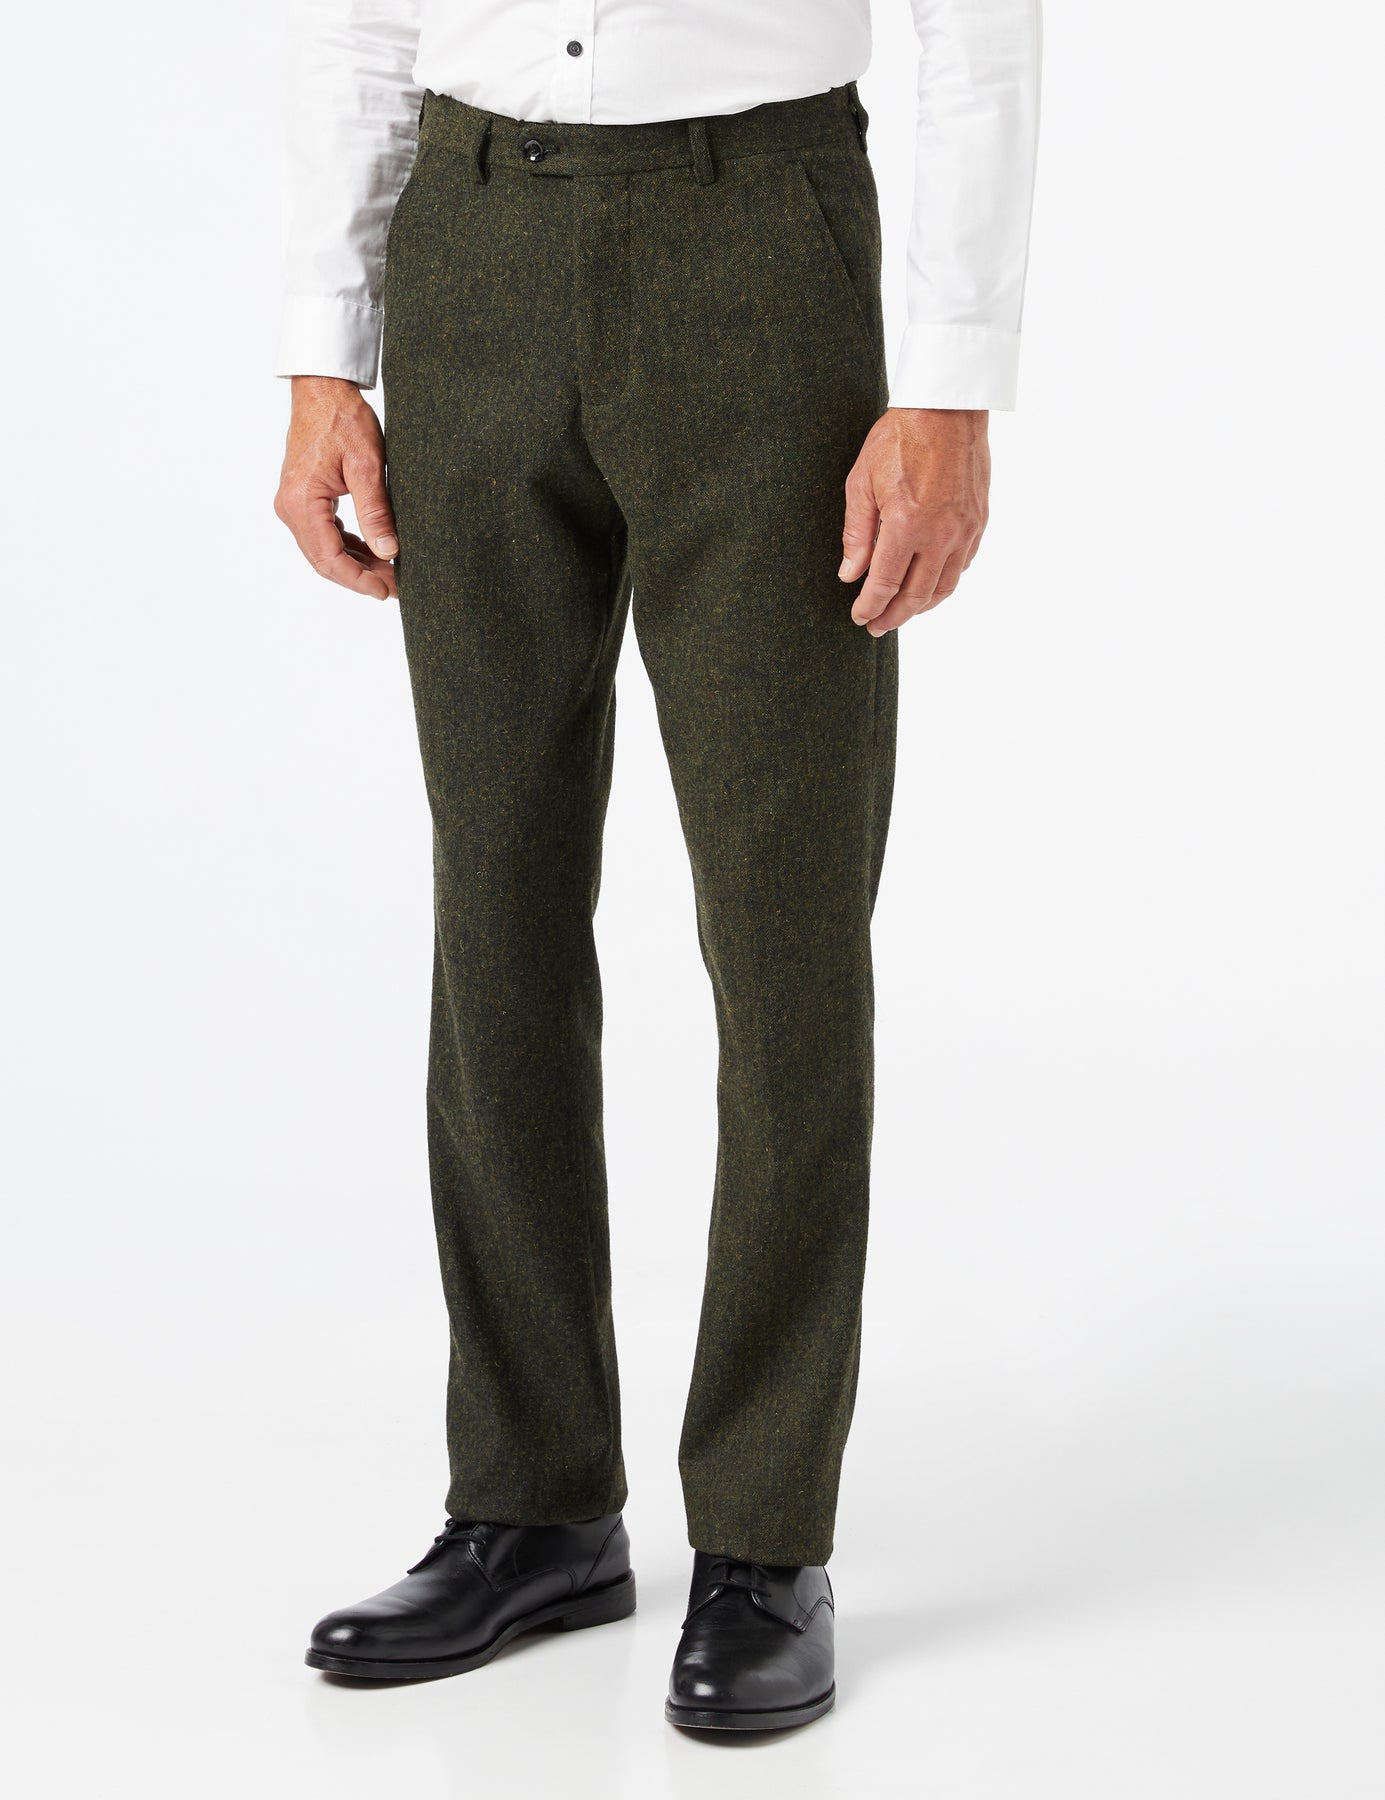 DANE - Green Tweed Suit for Men – XPOSED